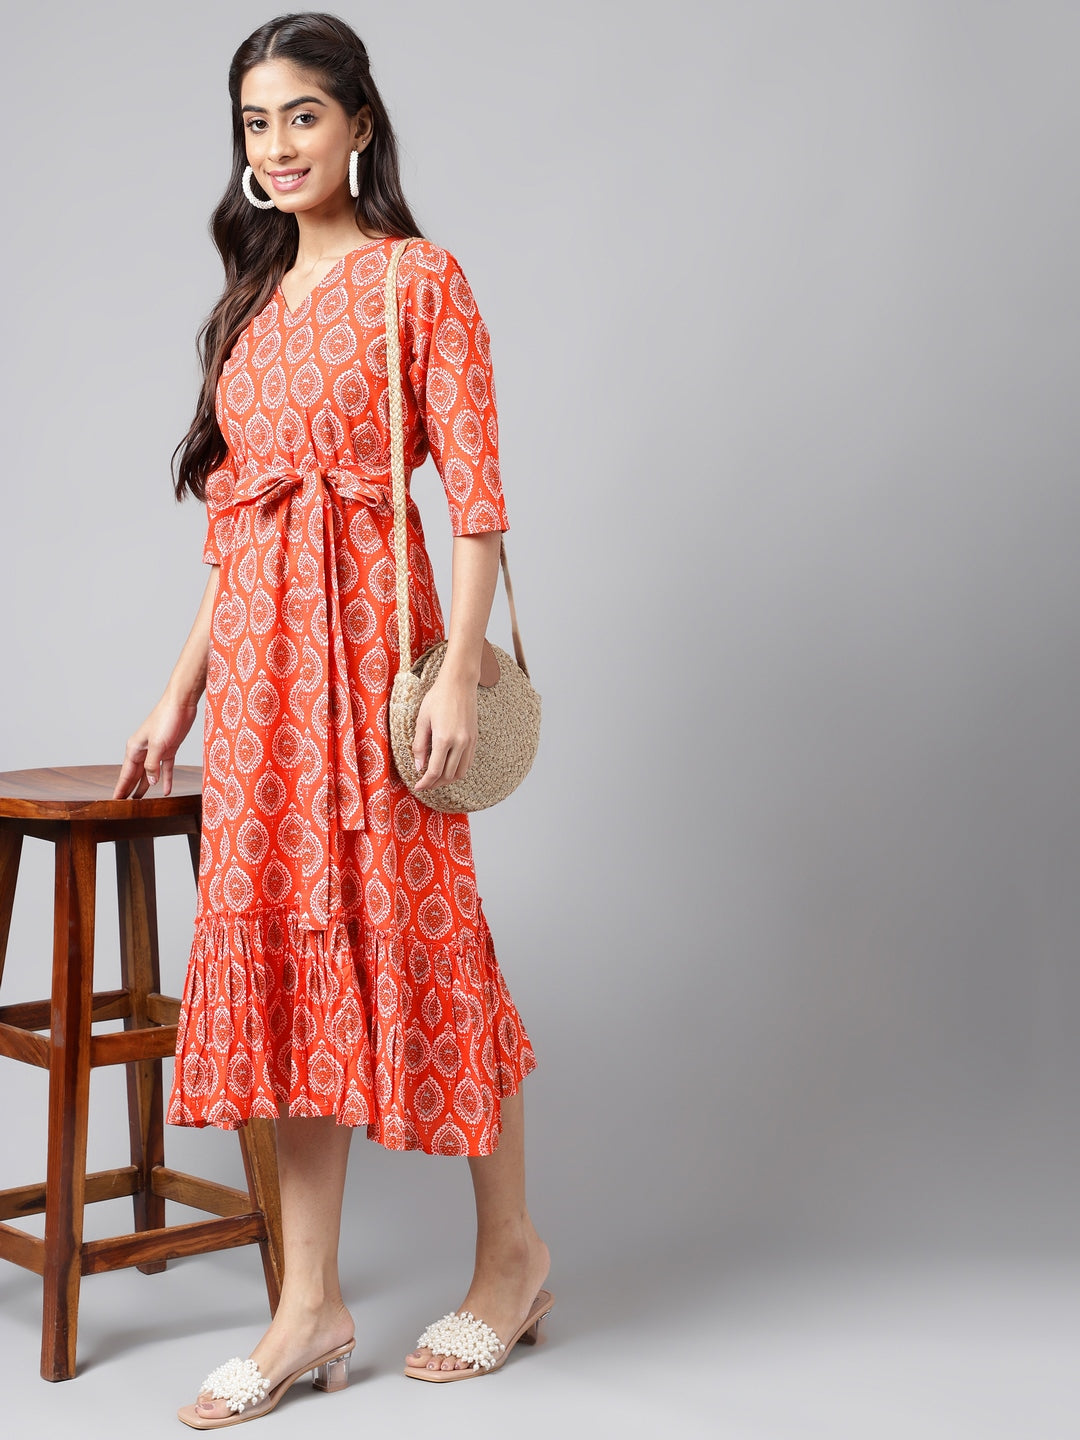 Women's Ethnic Motifs Printed Orange Cotton Dress - Janasya